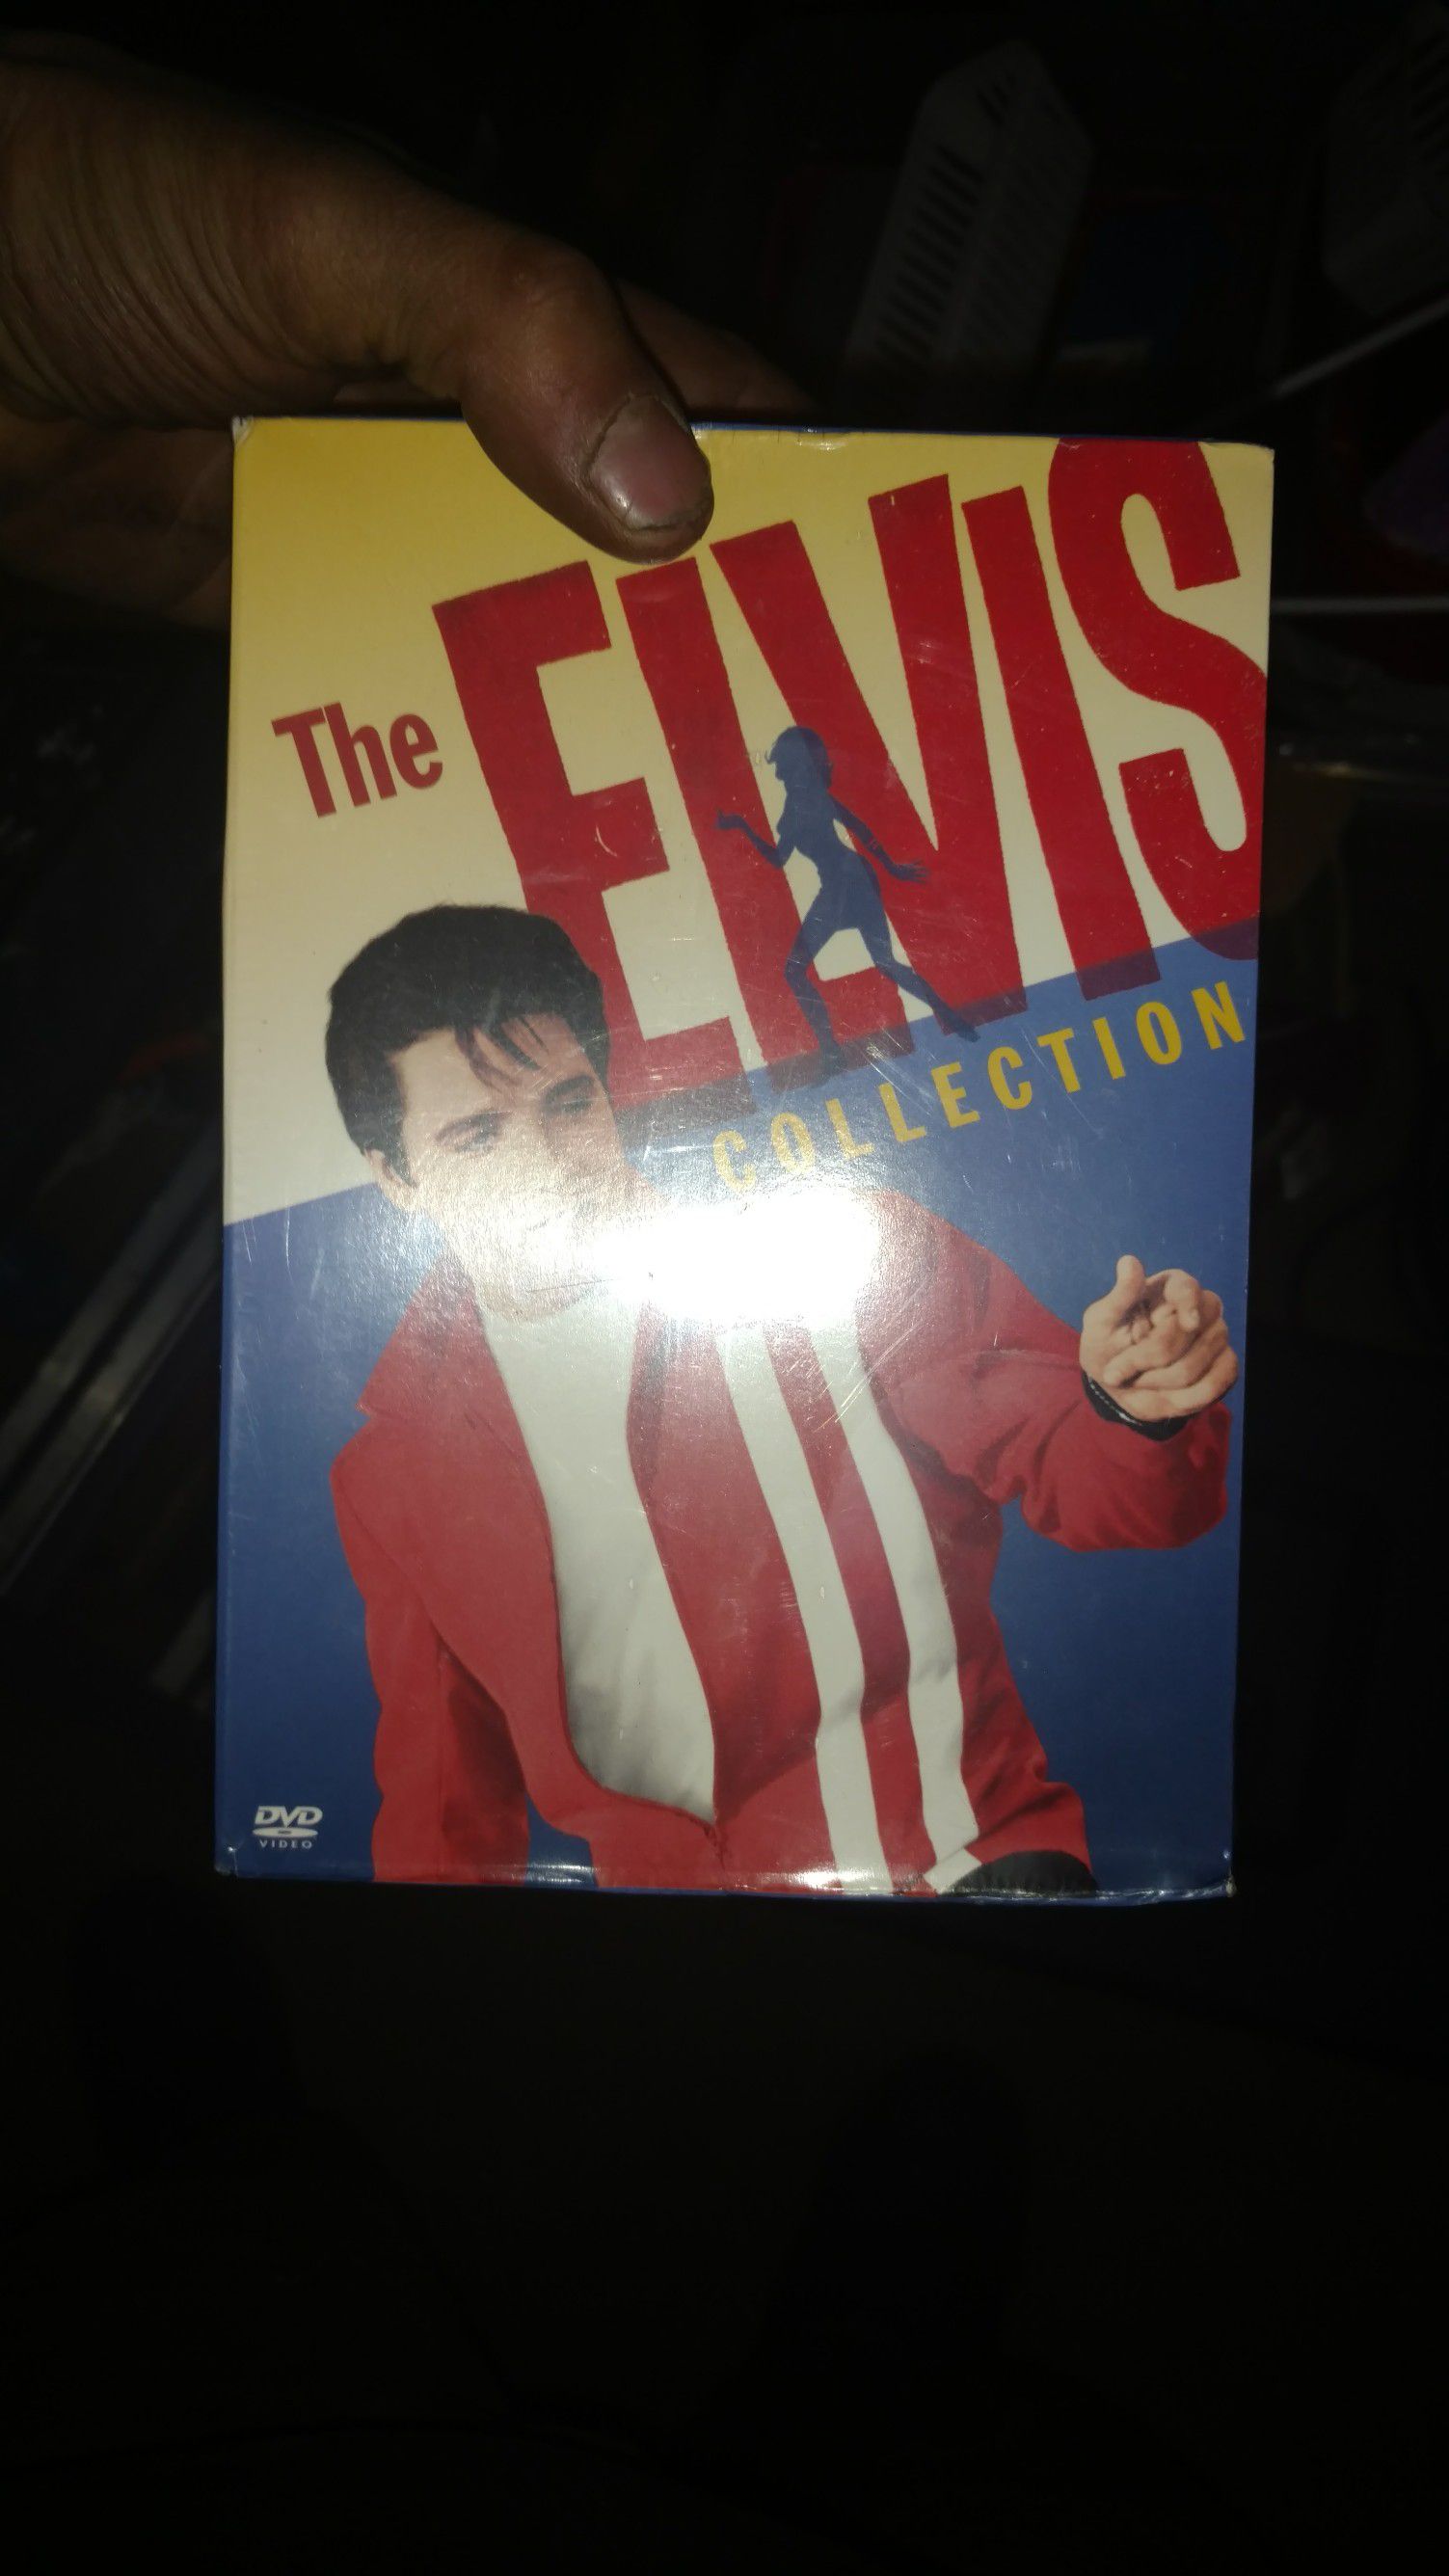 Elvis 6 disc collection set